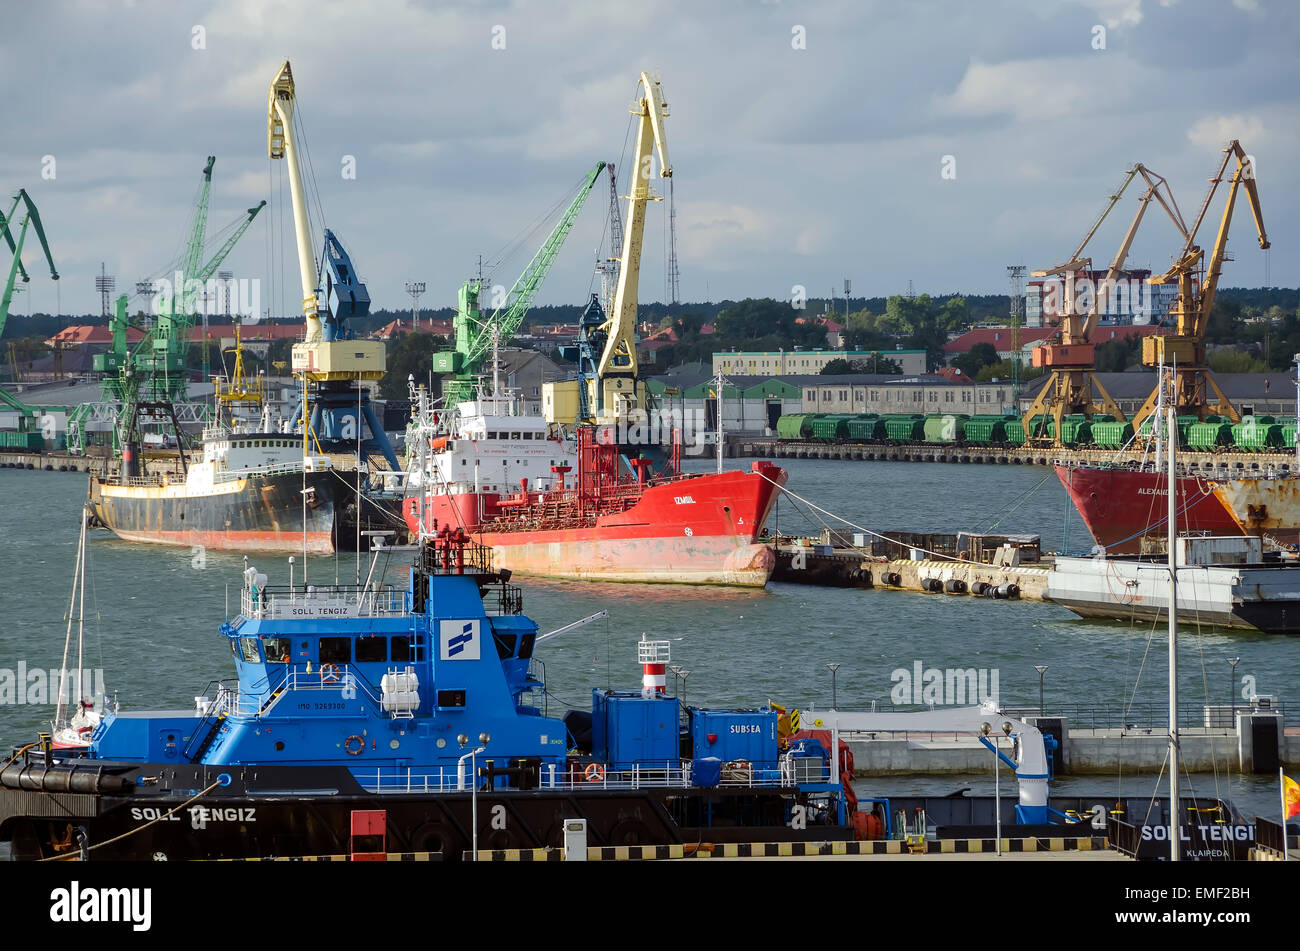 Klaipeda Lithuania Seaport Harbor cargo ships and cranes Stock Photo